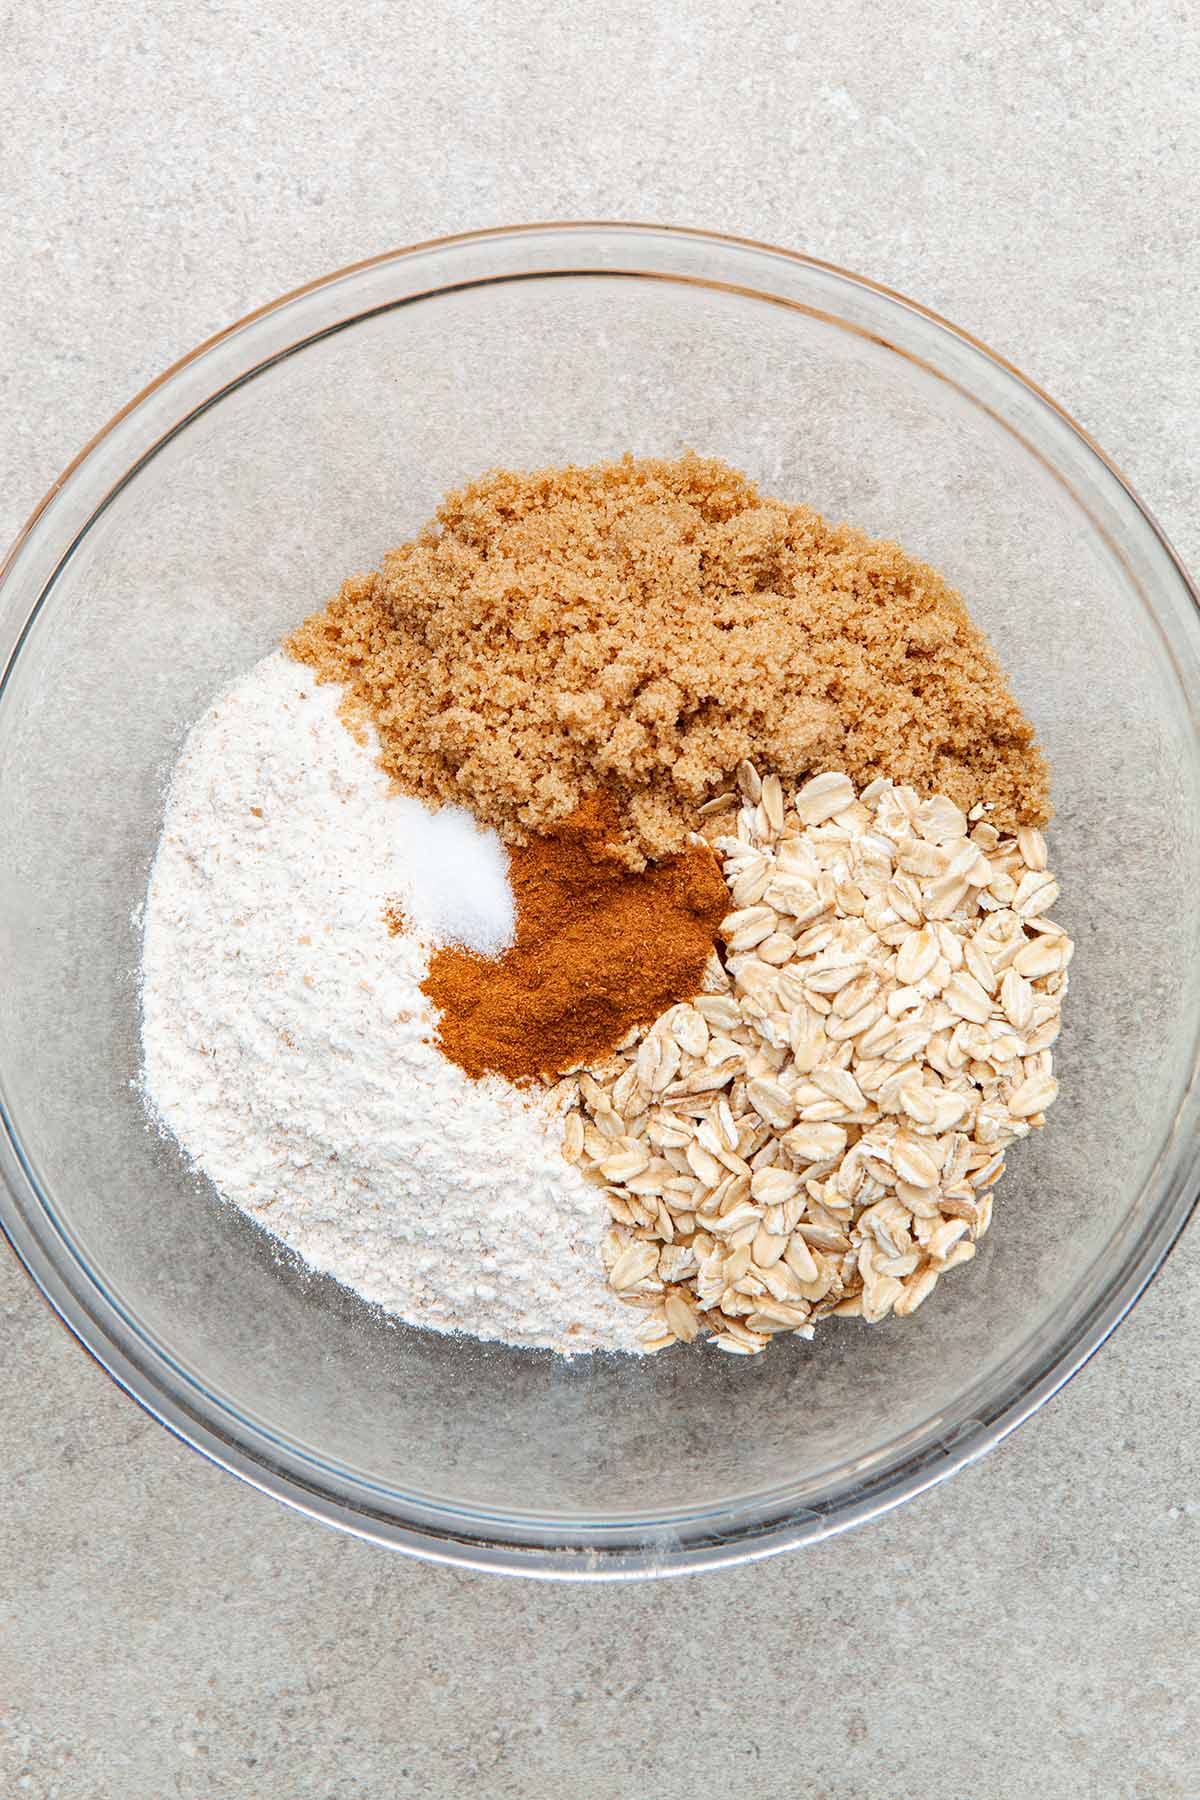 A bowl of oats, flour, brown sugar, cinnamon, and salt unmixed.